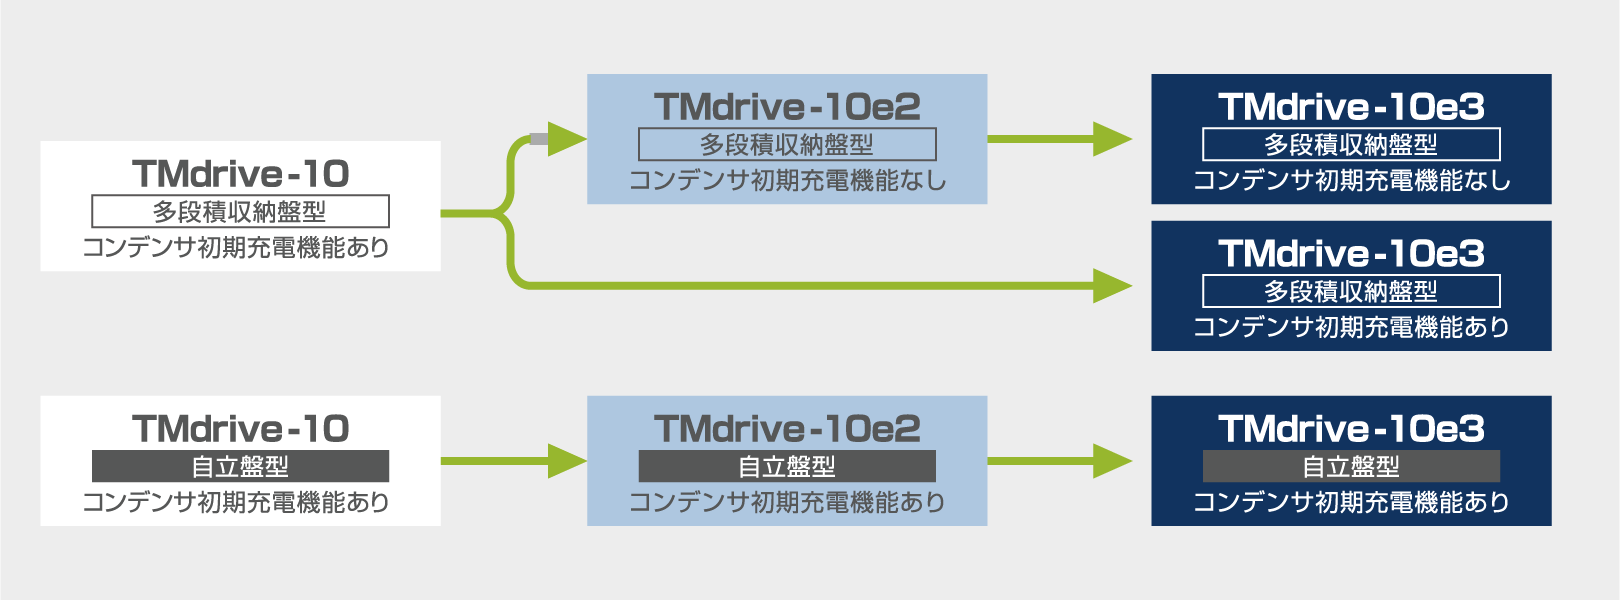 TMdriveシリーズの変遷